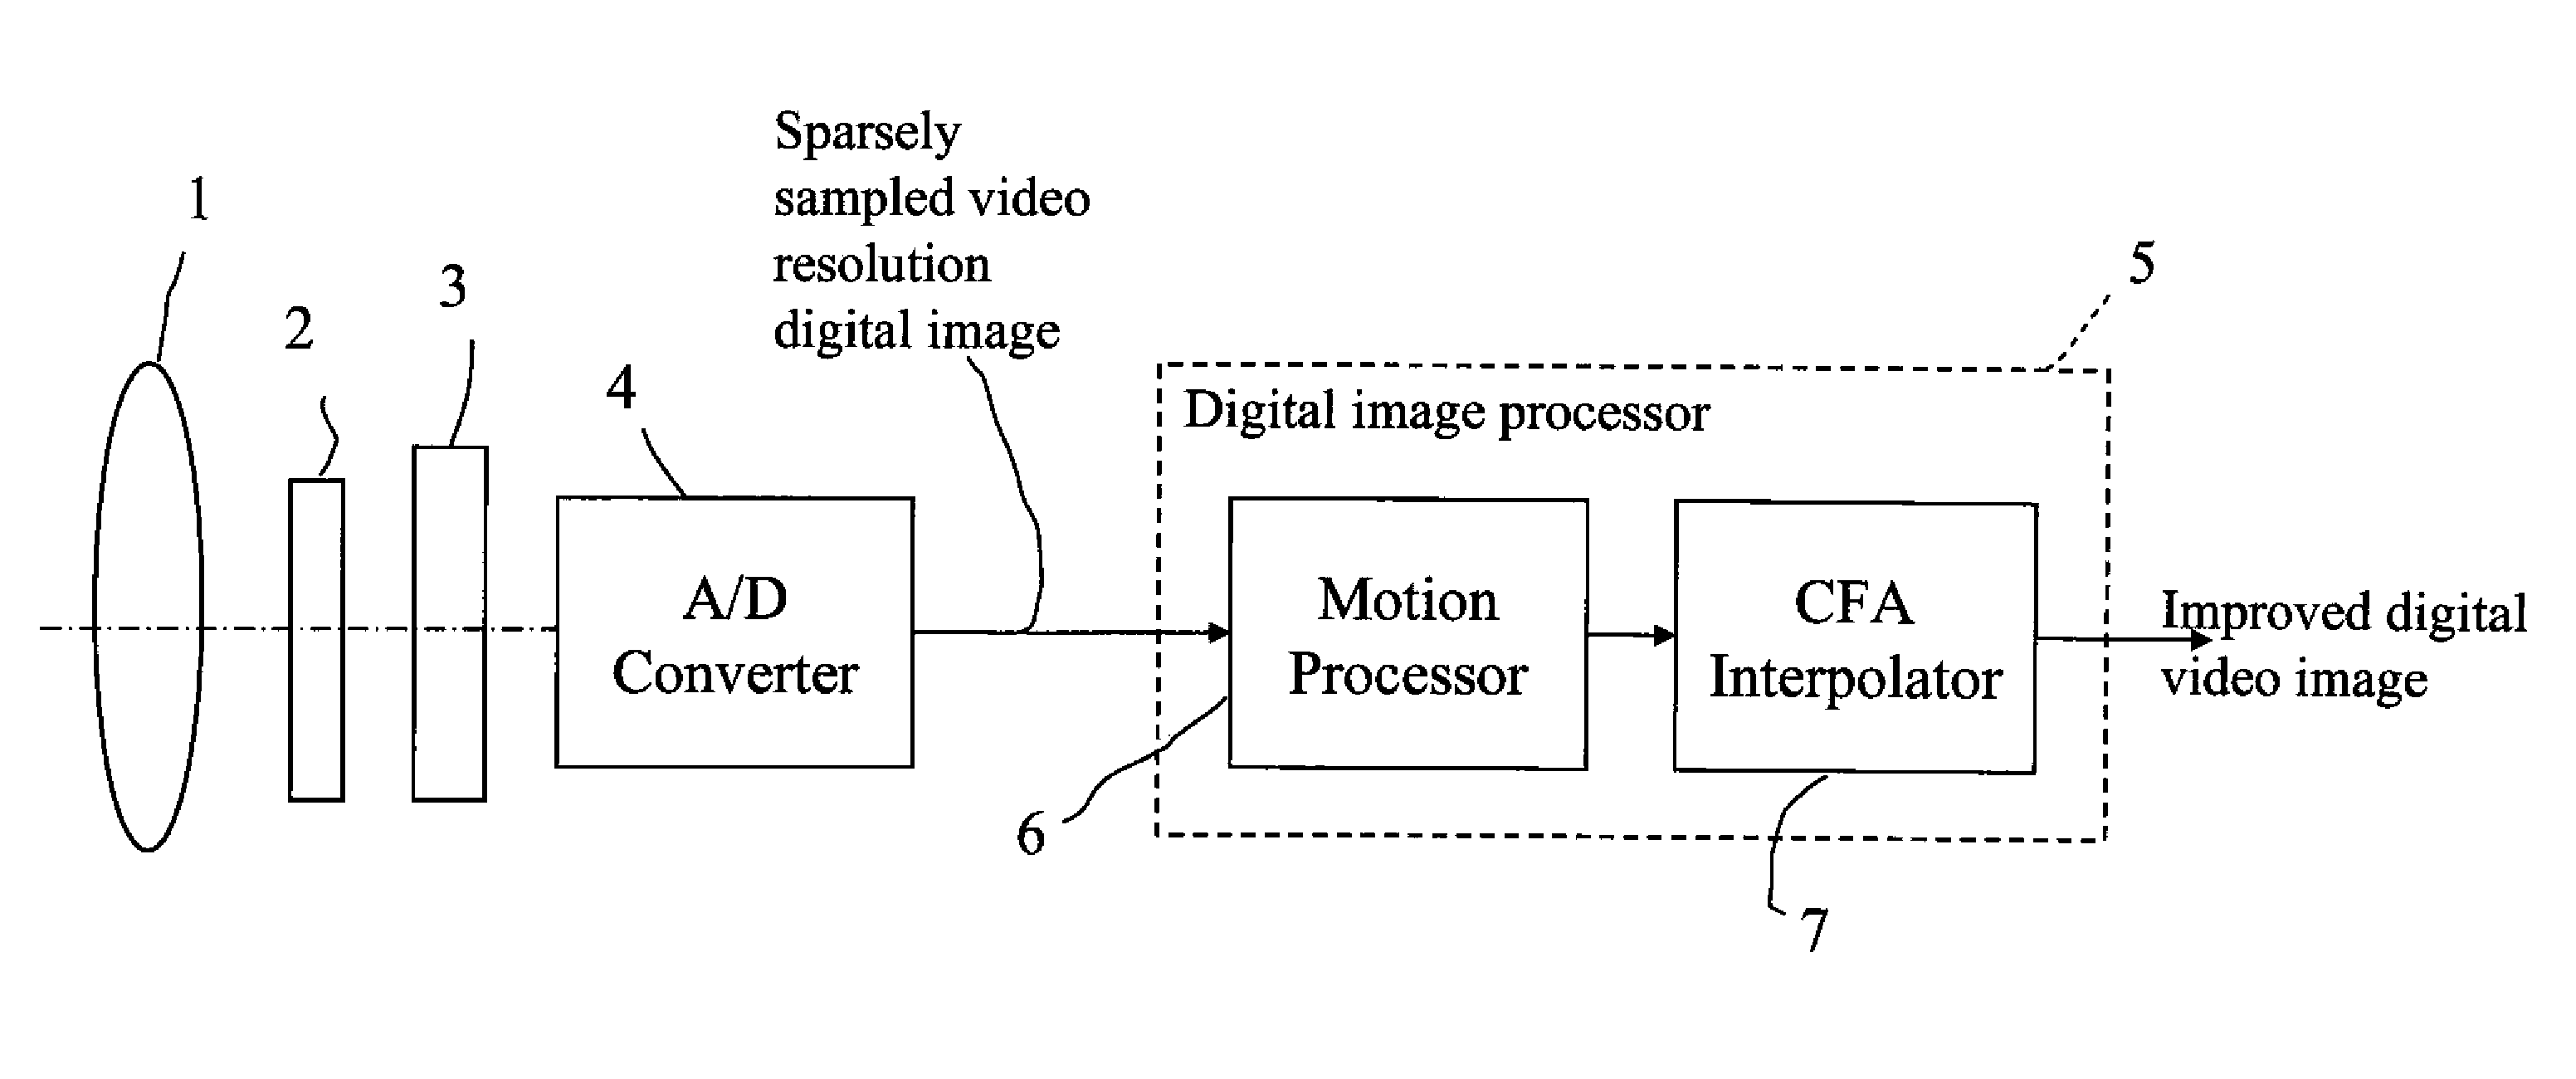 Method for improved digital video image quality